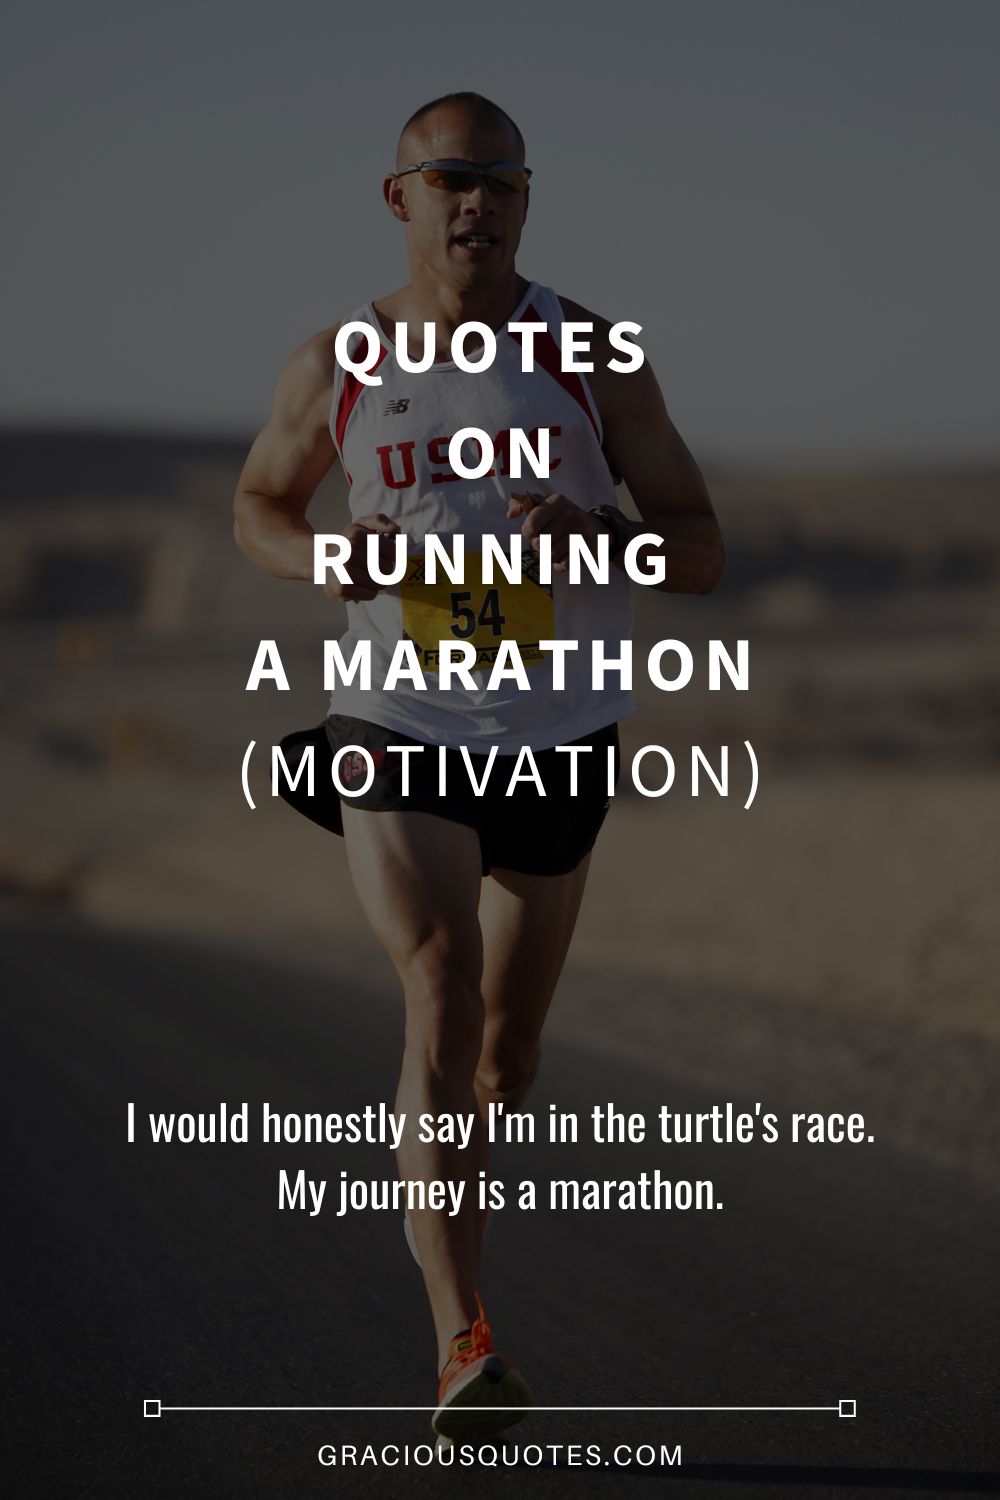 Quotes on Running a Marathon (MOTIVATION) - Gracious Quotes